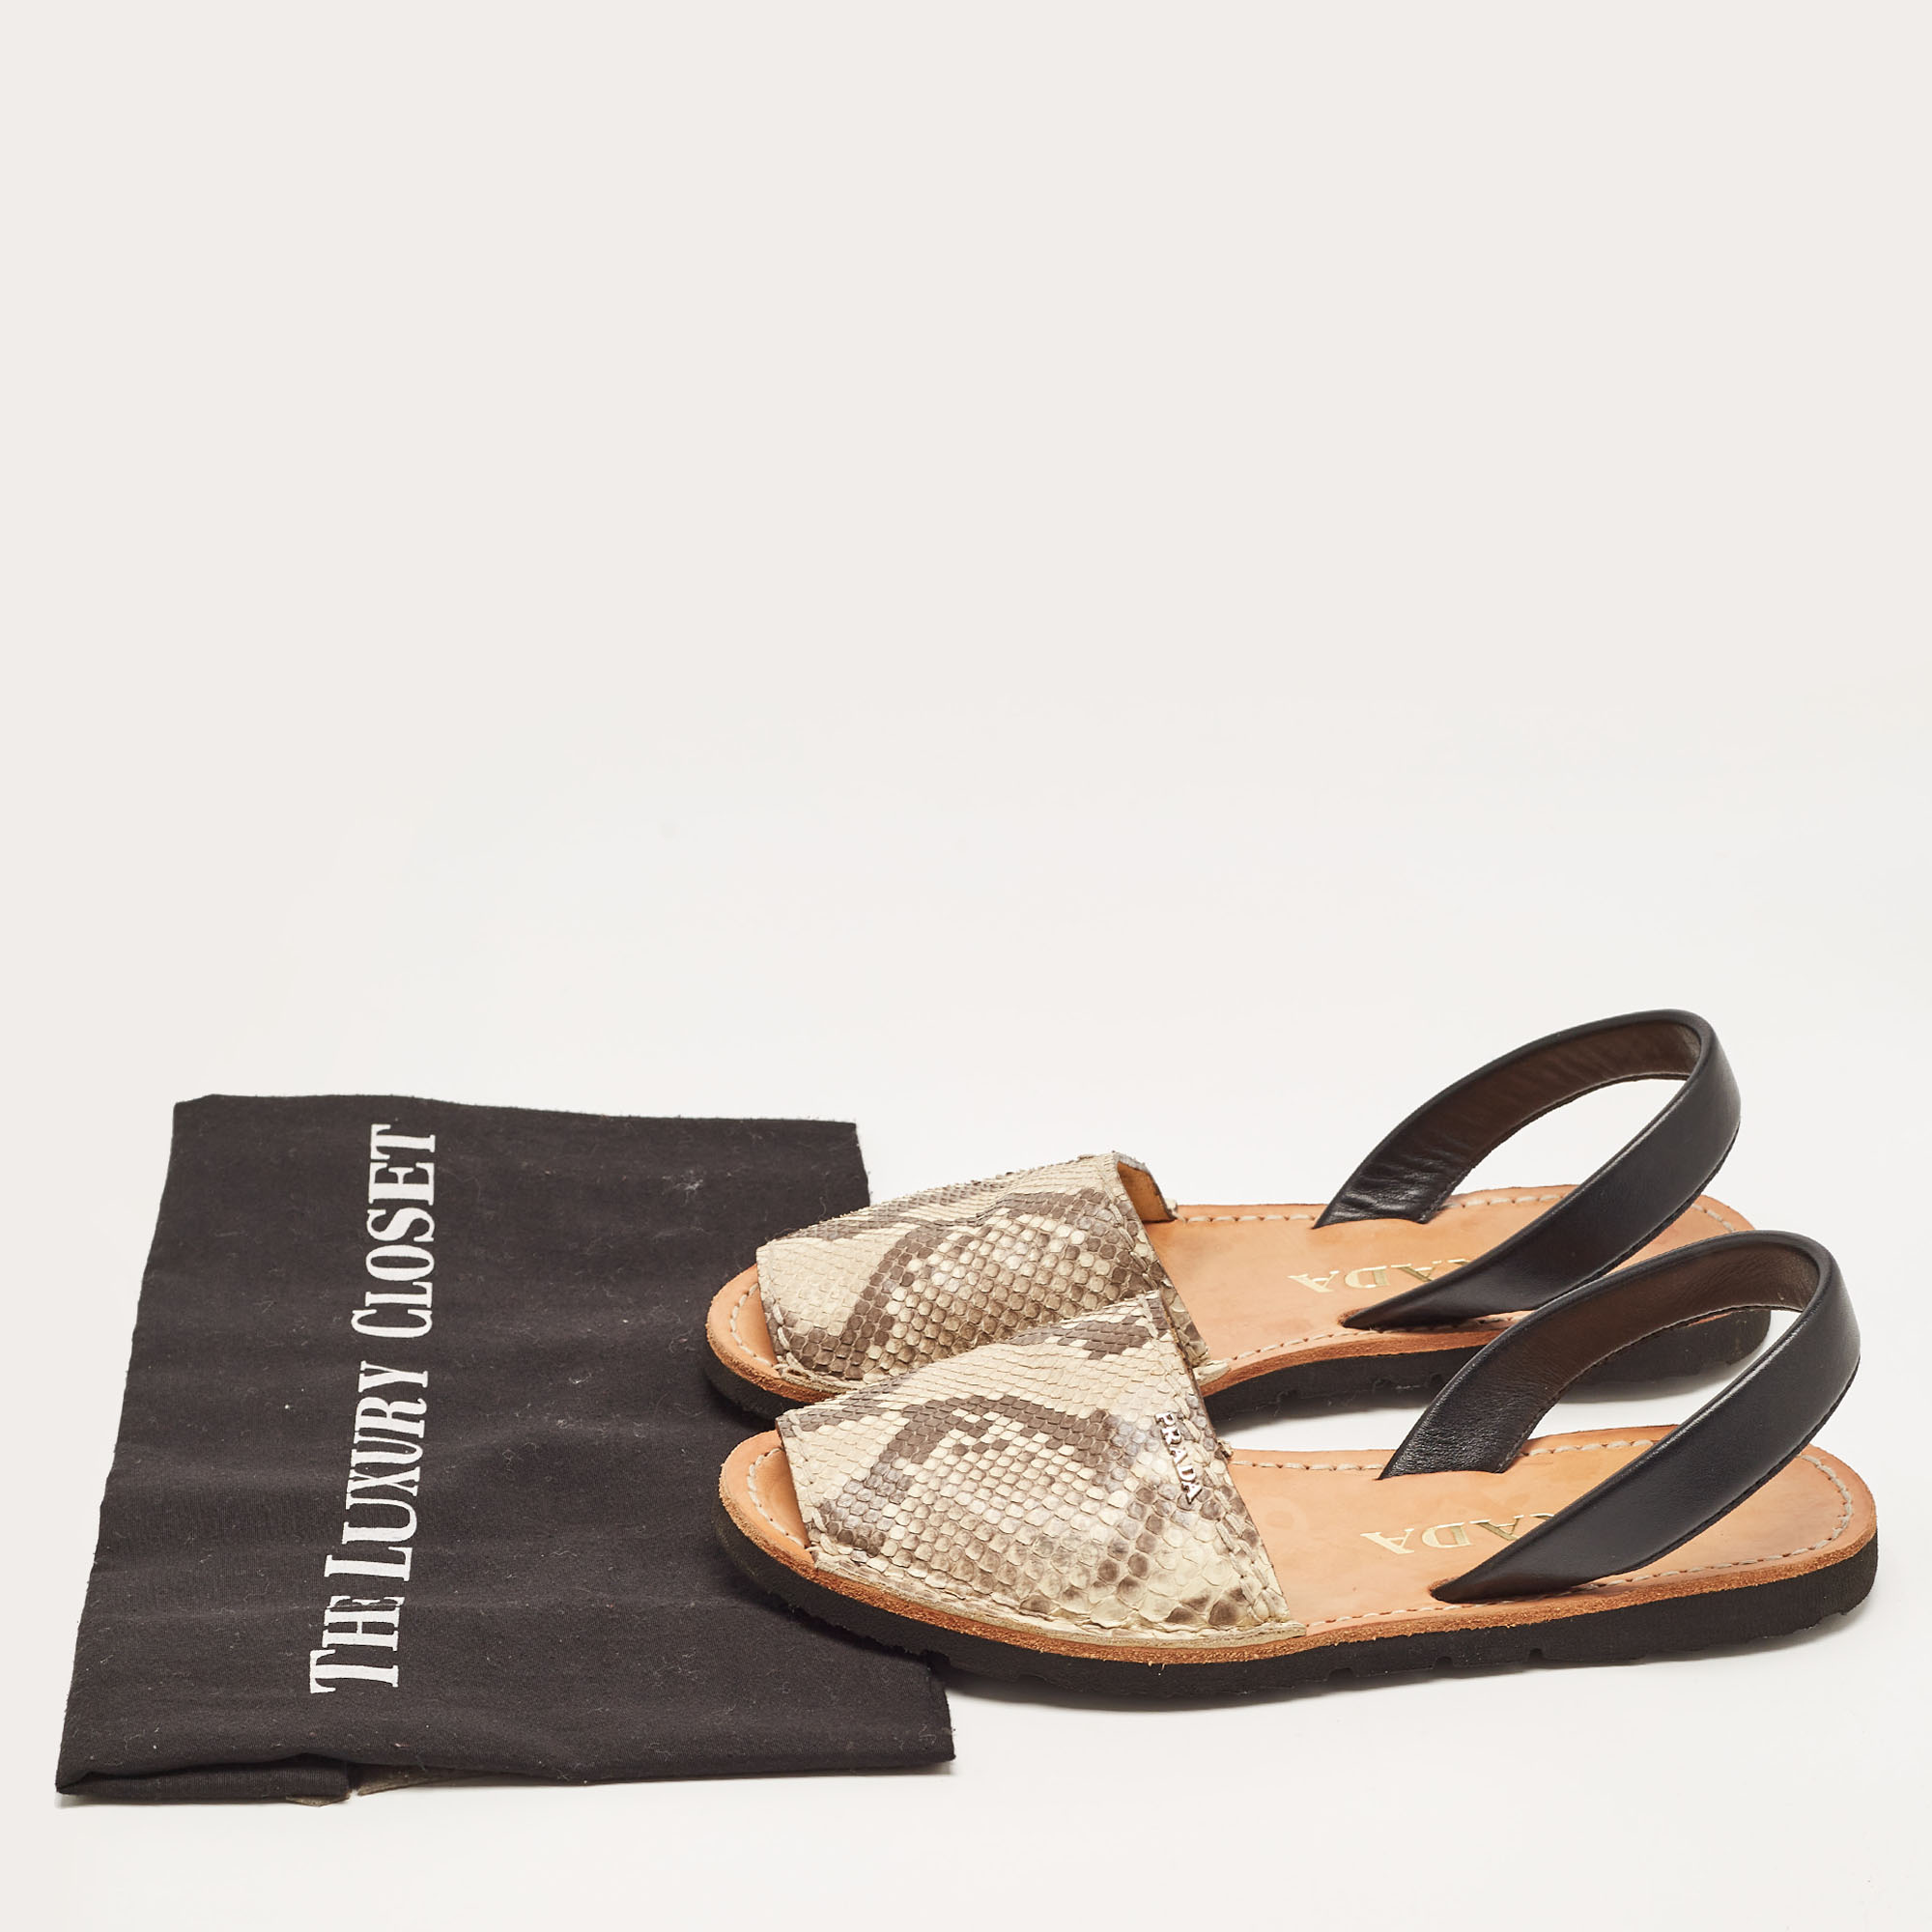 .Prada Beige/Black Python And Leather Flat Slingback Sandals Size 37